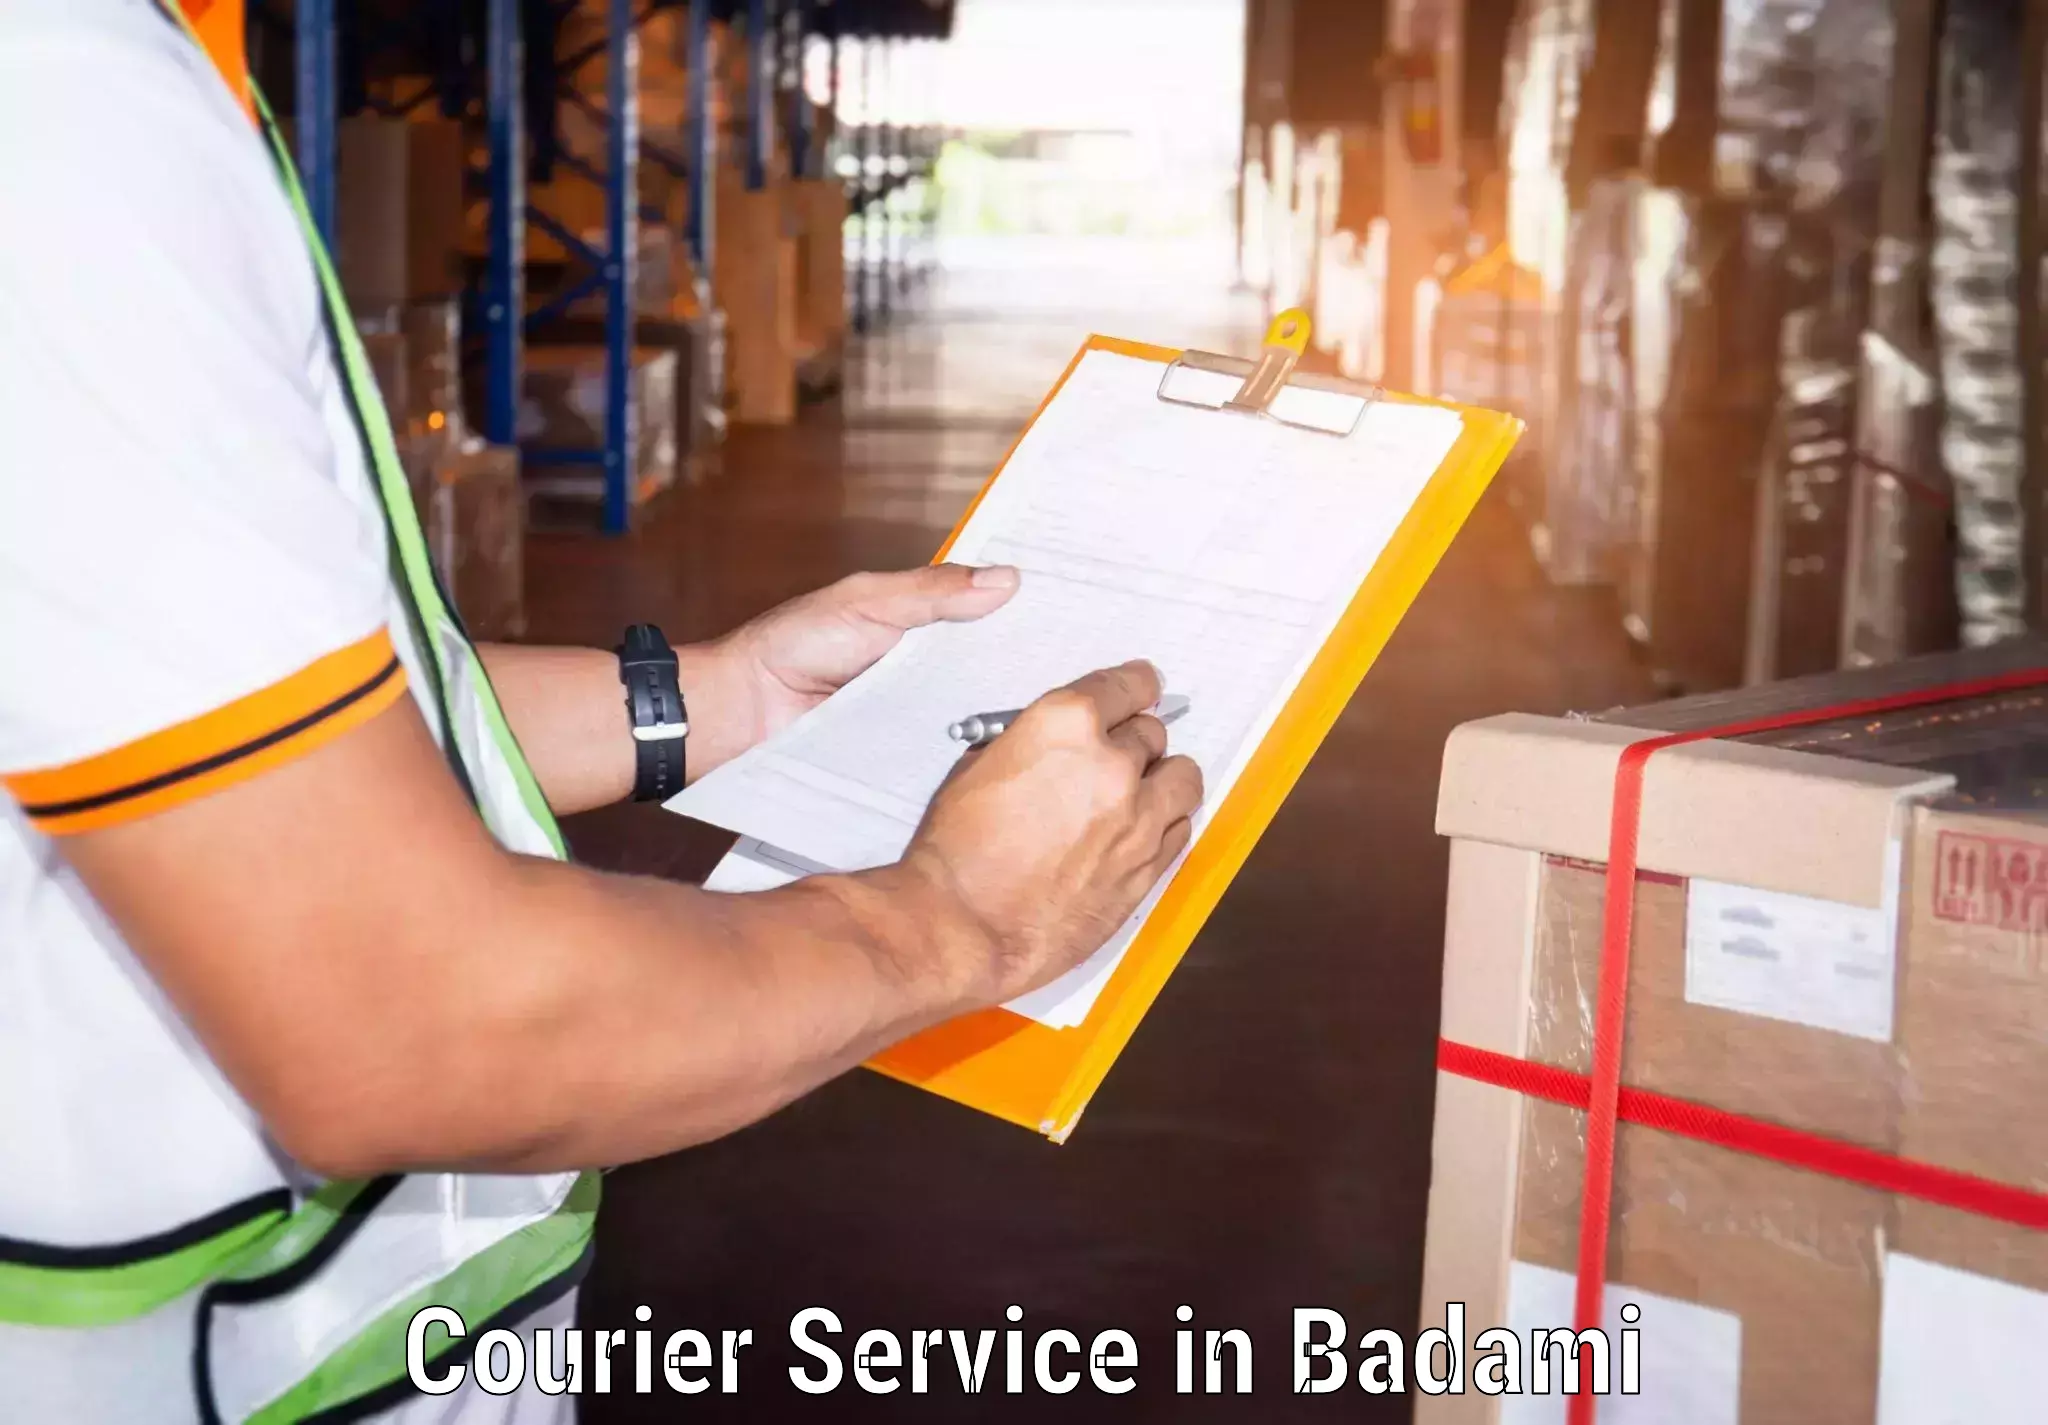 Supply chain efficiency in Badami